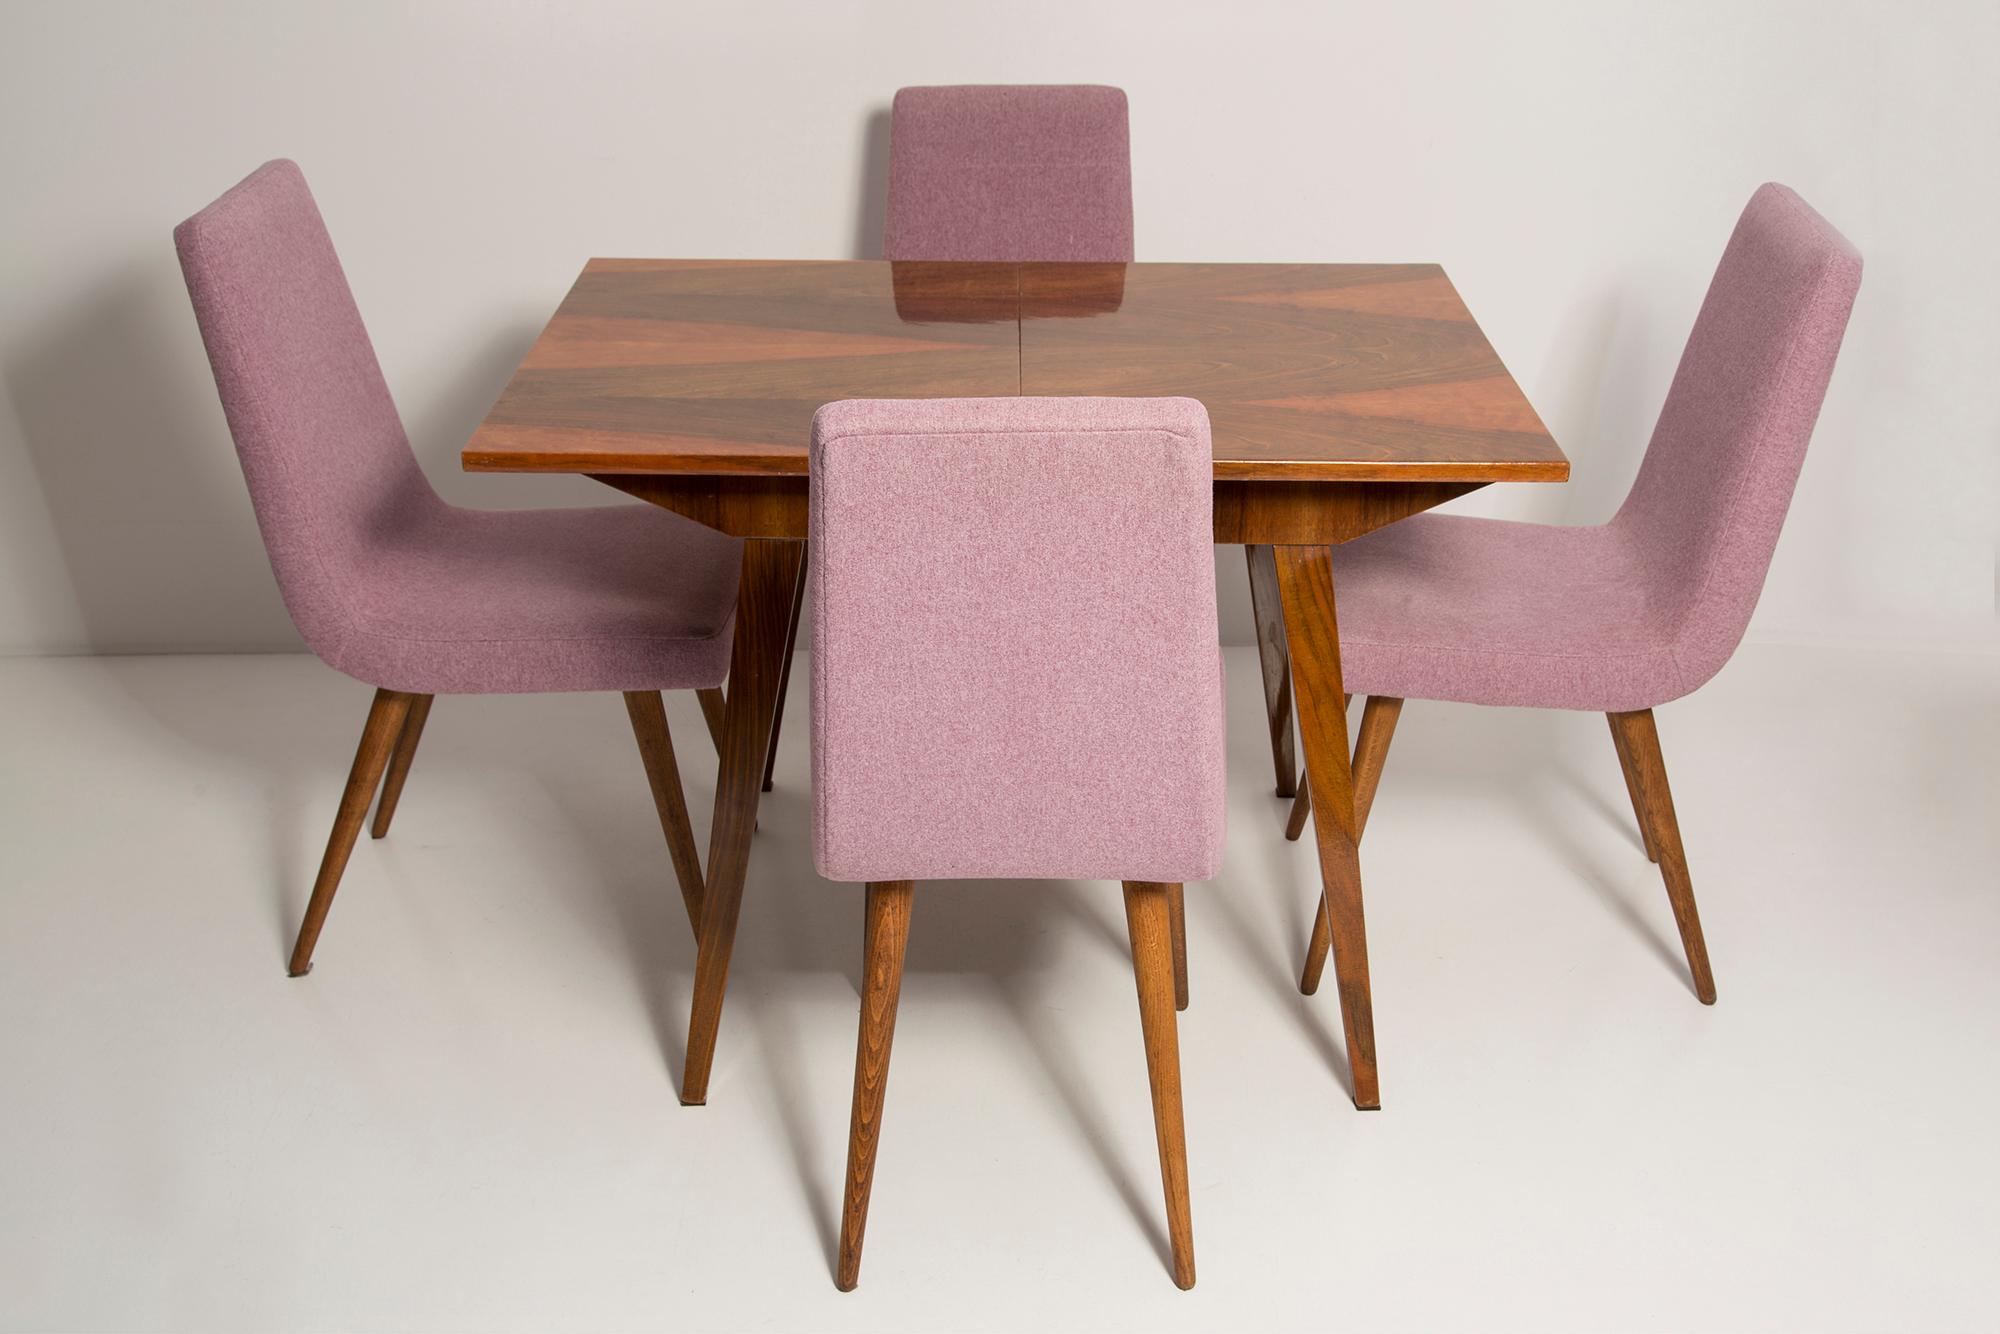 Midcentury Walnut Kitchen Table and Chairs, Danuta Lewandowska, Poland, 1960s For Sale 1